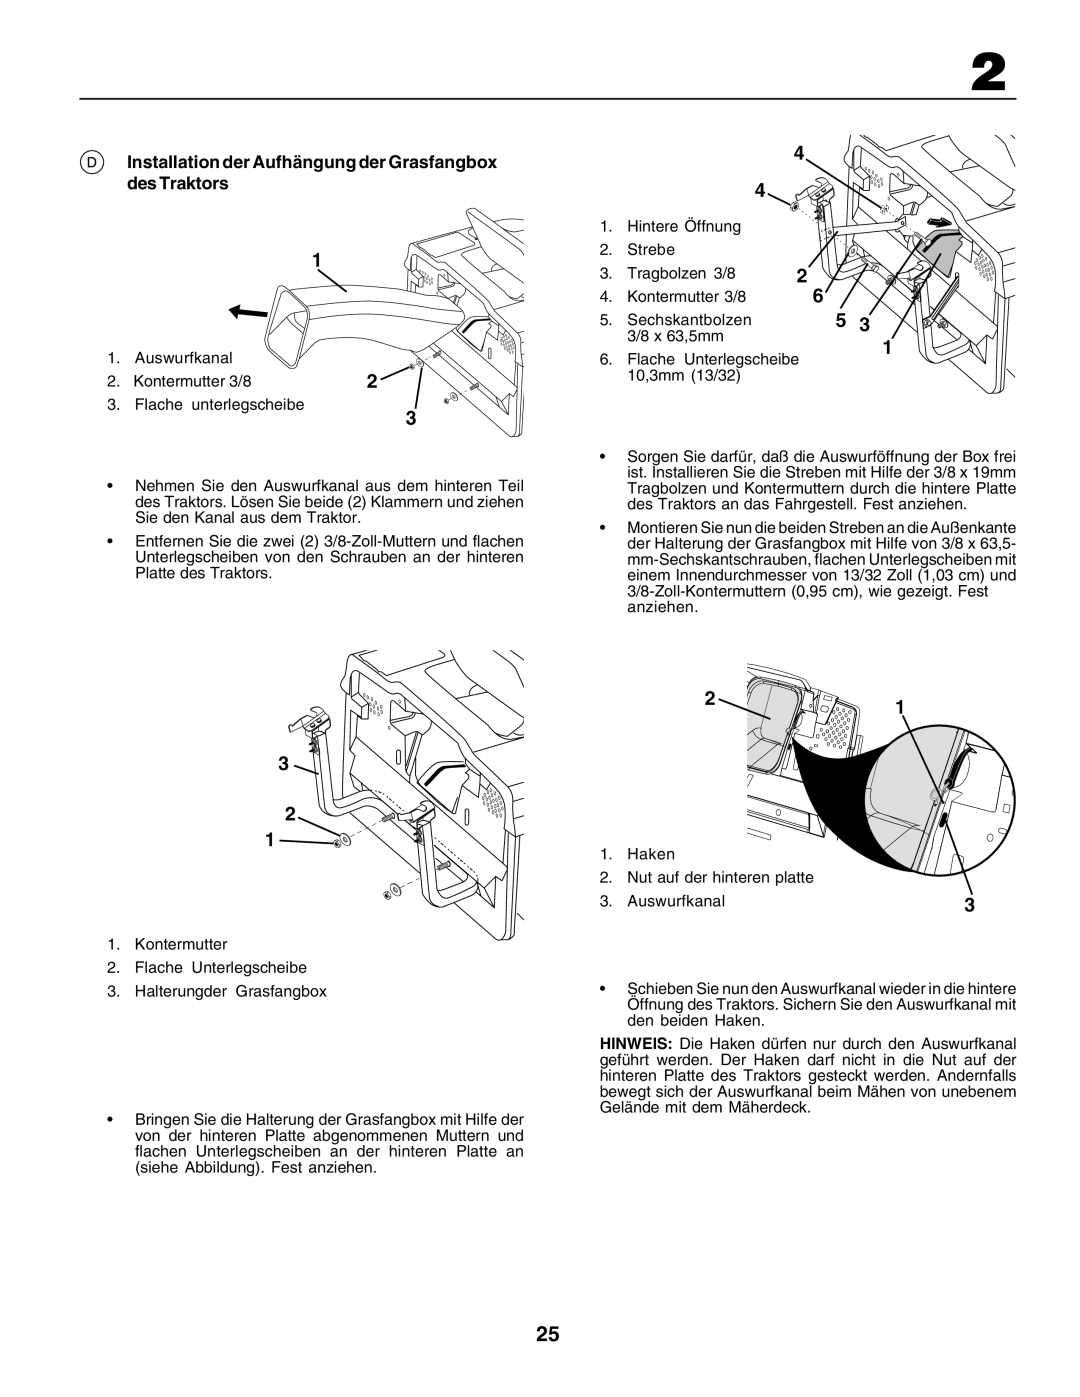 Husqvarna CT135 instruction manual 3 2 1, Auswurfkanal 